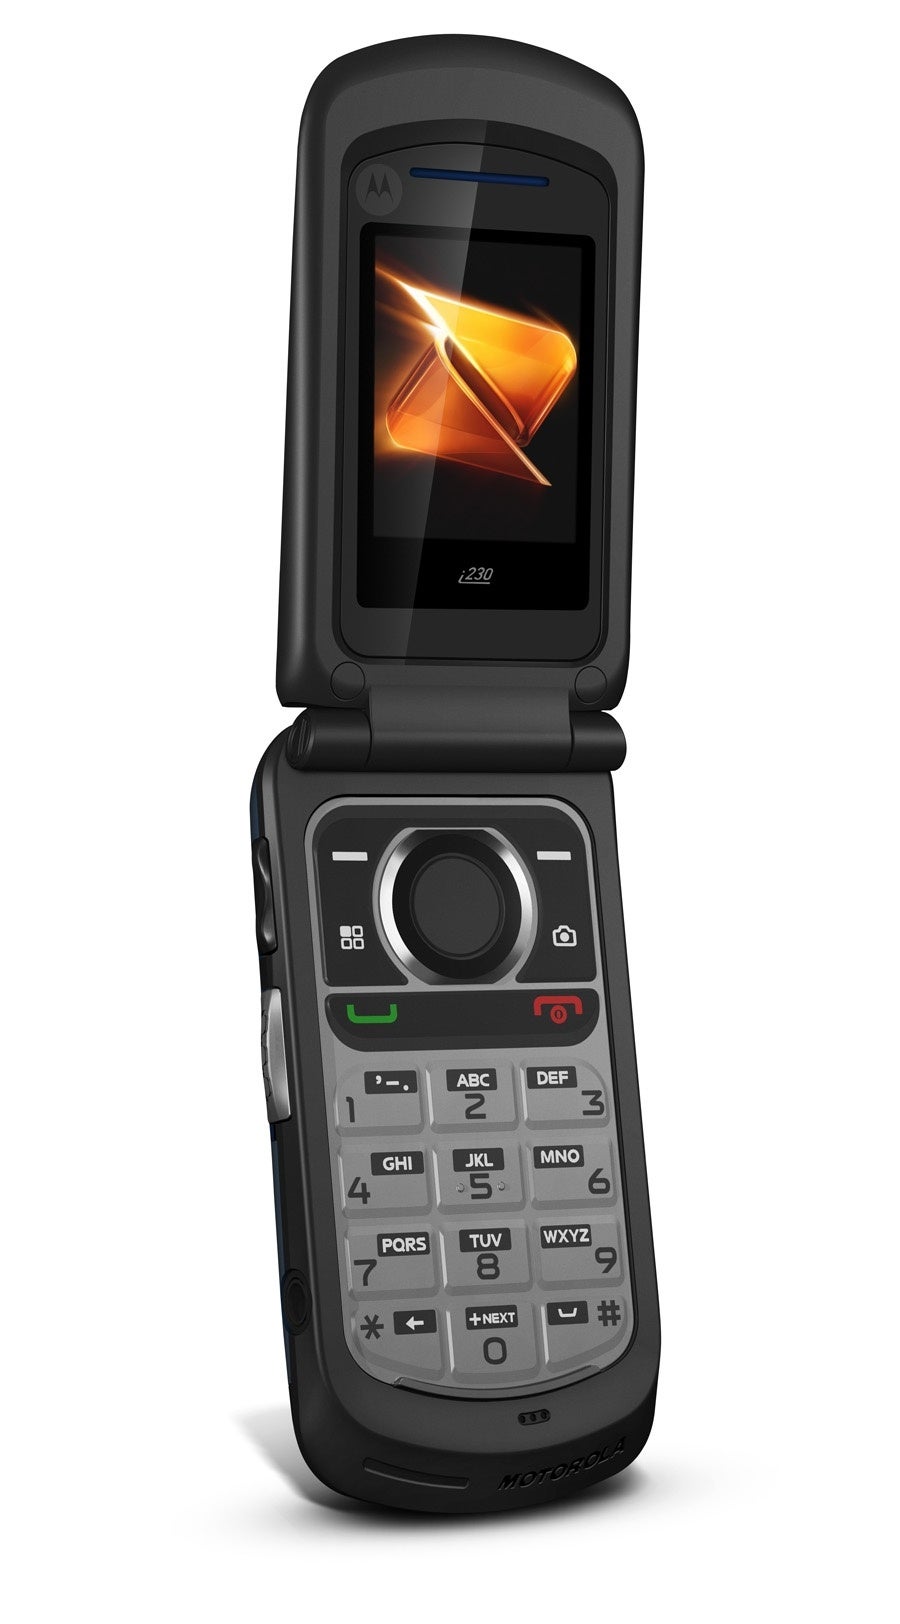 Motorola i412 - Boost Mobile is getting the Motorola Clutch+ i475, Motorola Theory and Motorola i412